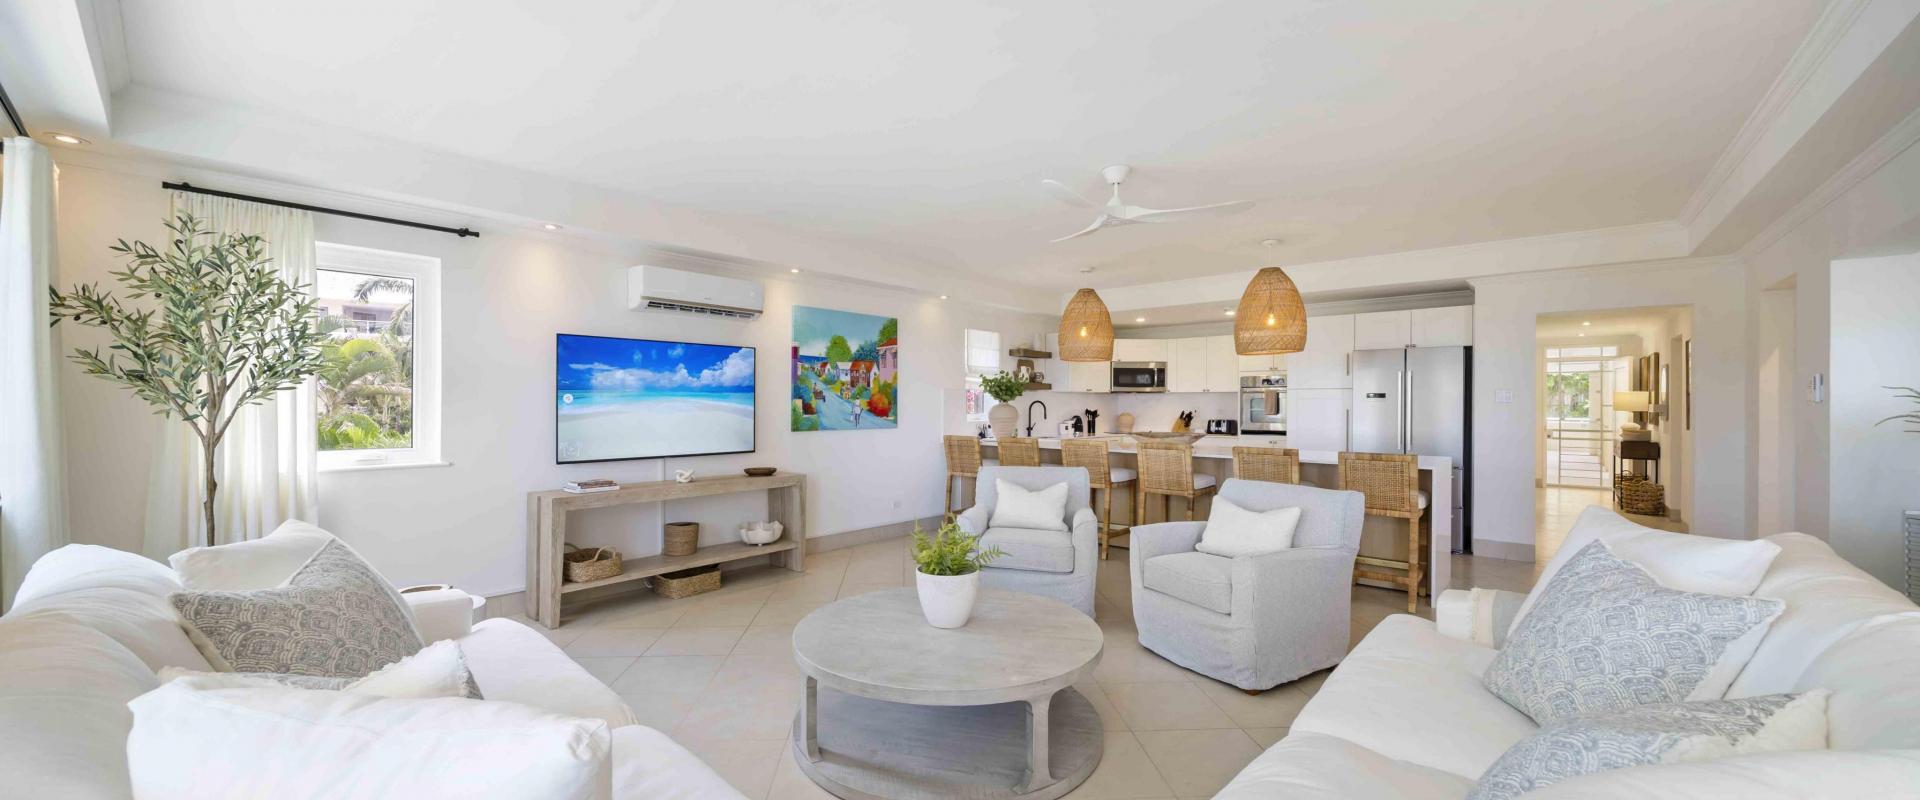 Palm Beach 204 Barbados Beachfront Condo Rental Couch Looking Onto TV